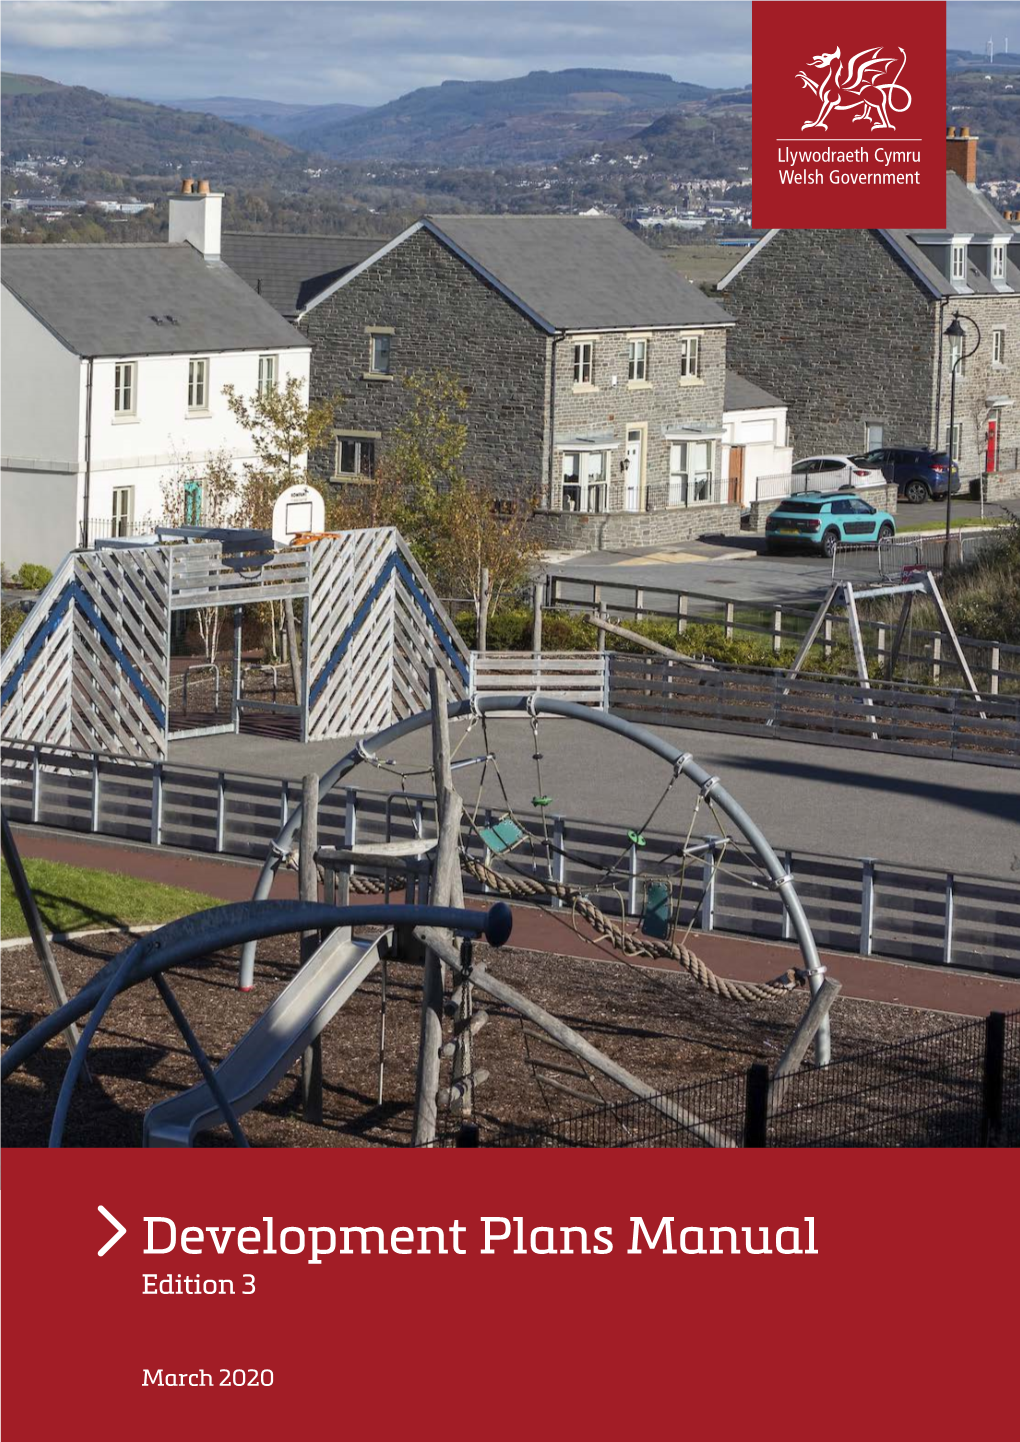 Local Development Plan Manual